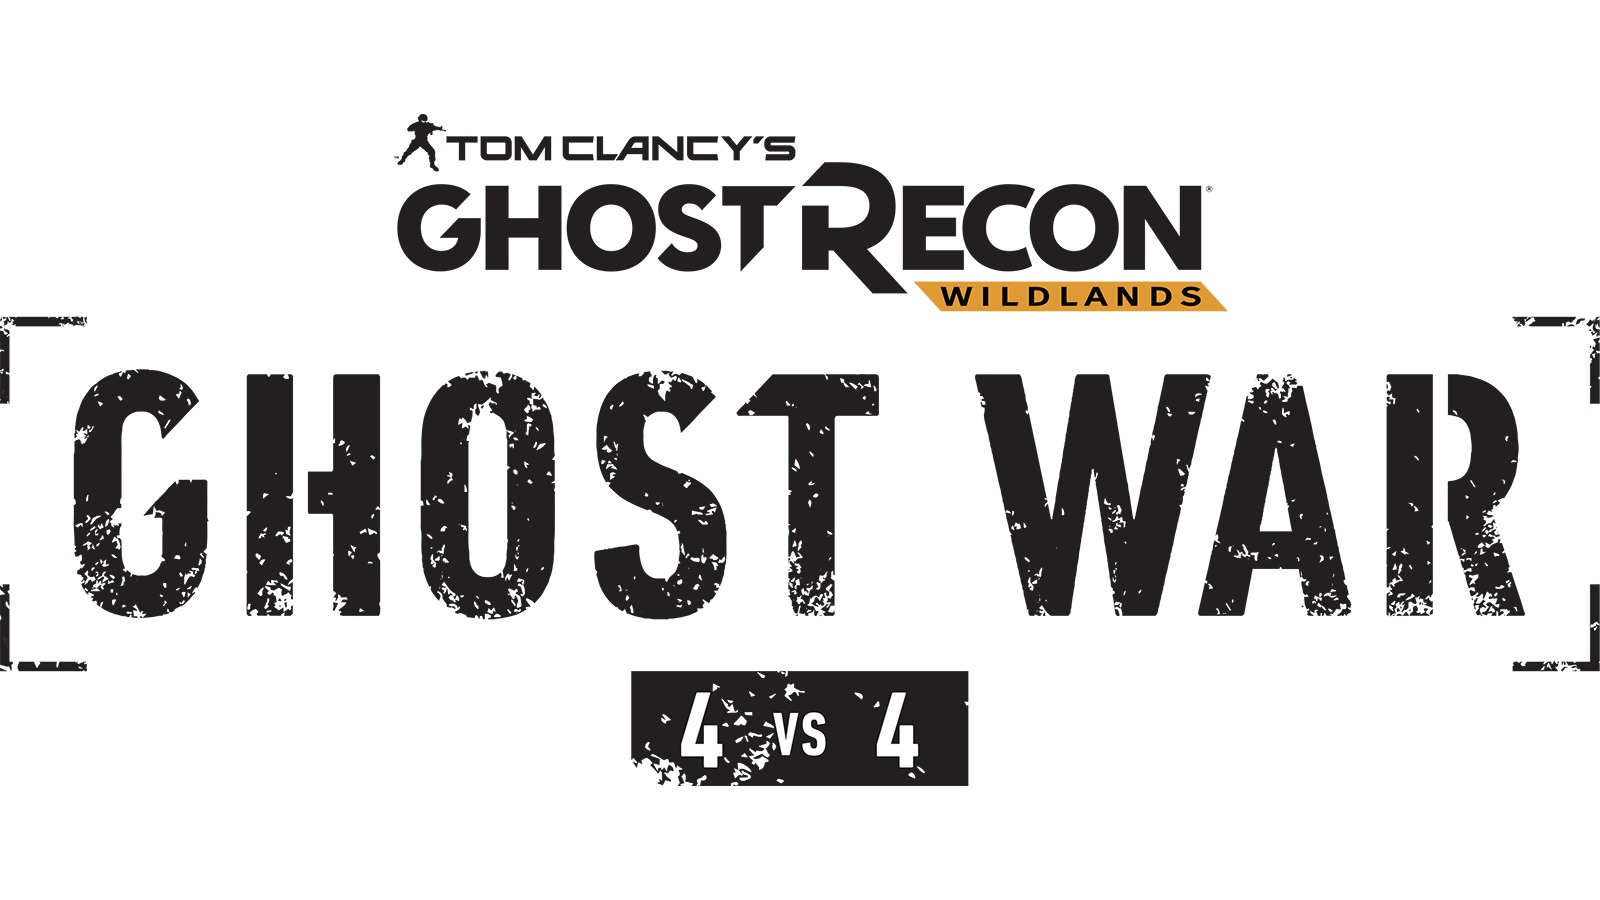 Endelig blir det spiller-mot-spiller flerspiller i Ghost Recon Wildlands - og betaen kommer allerede i sommer.